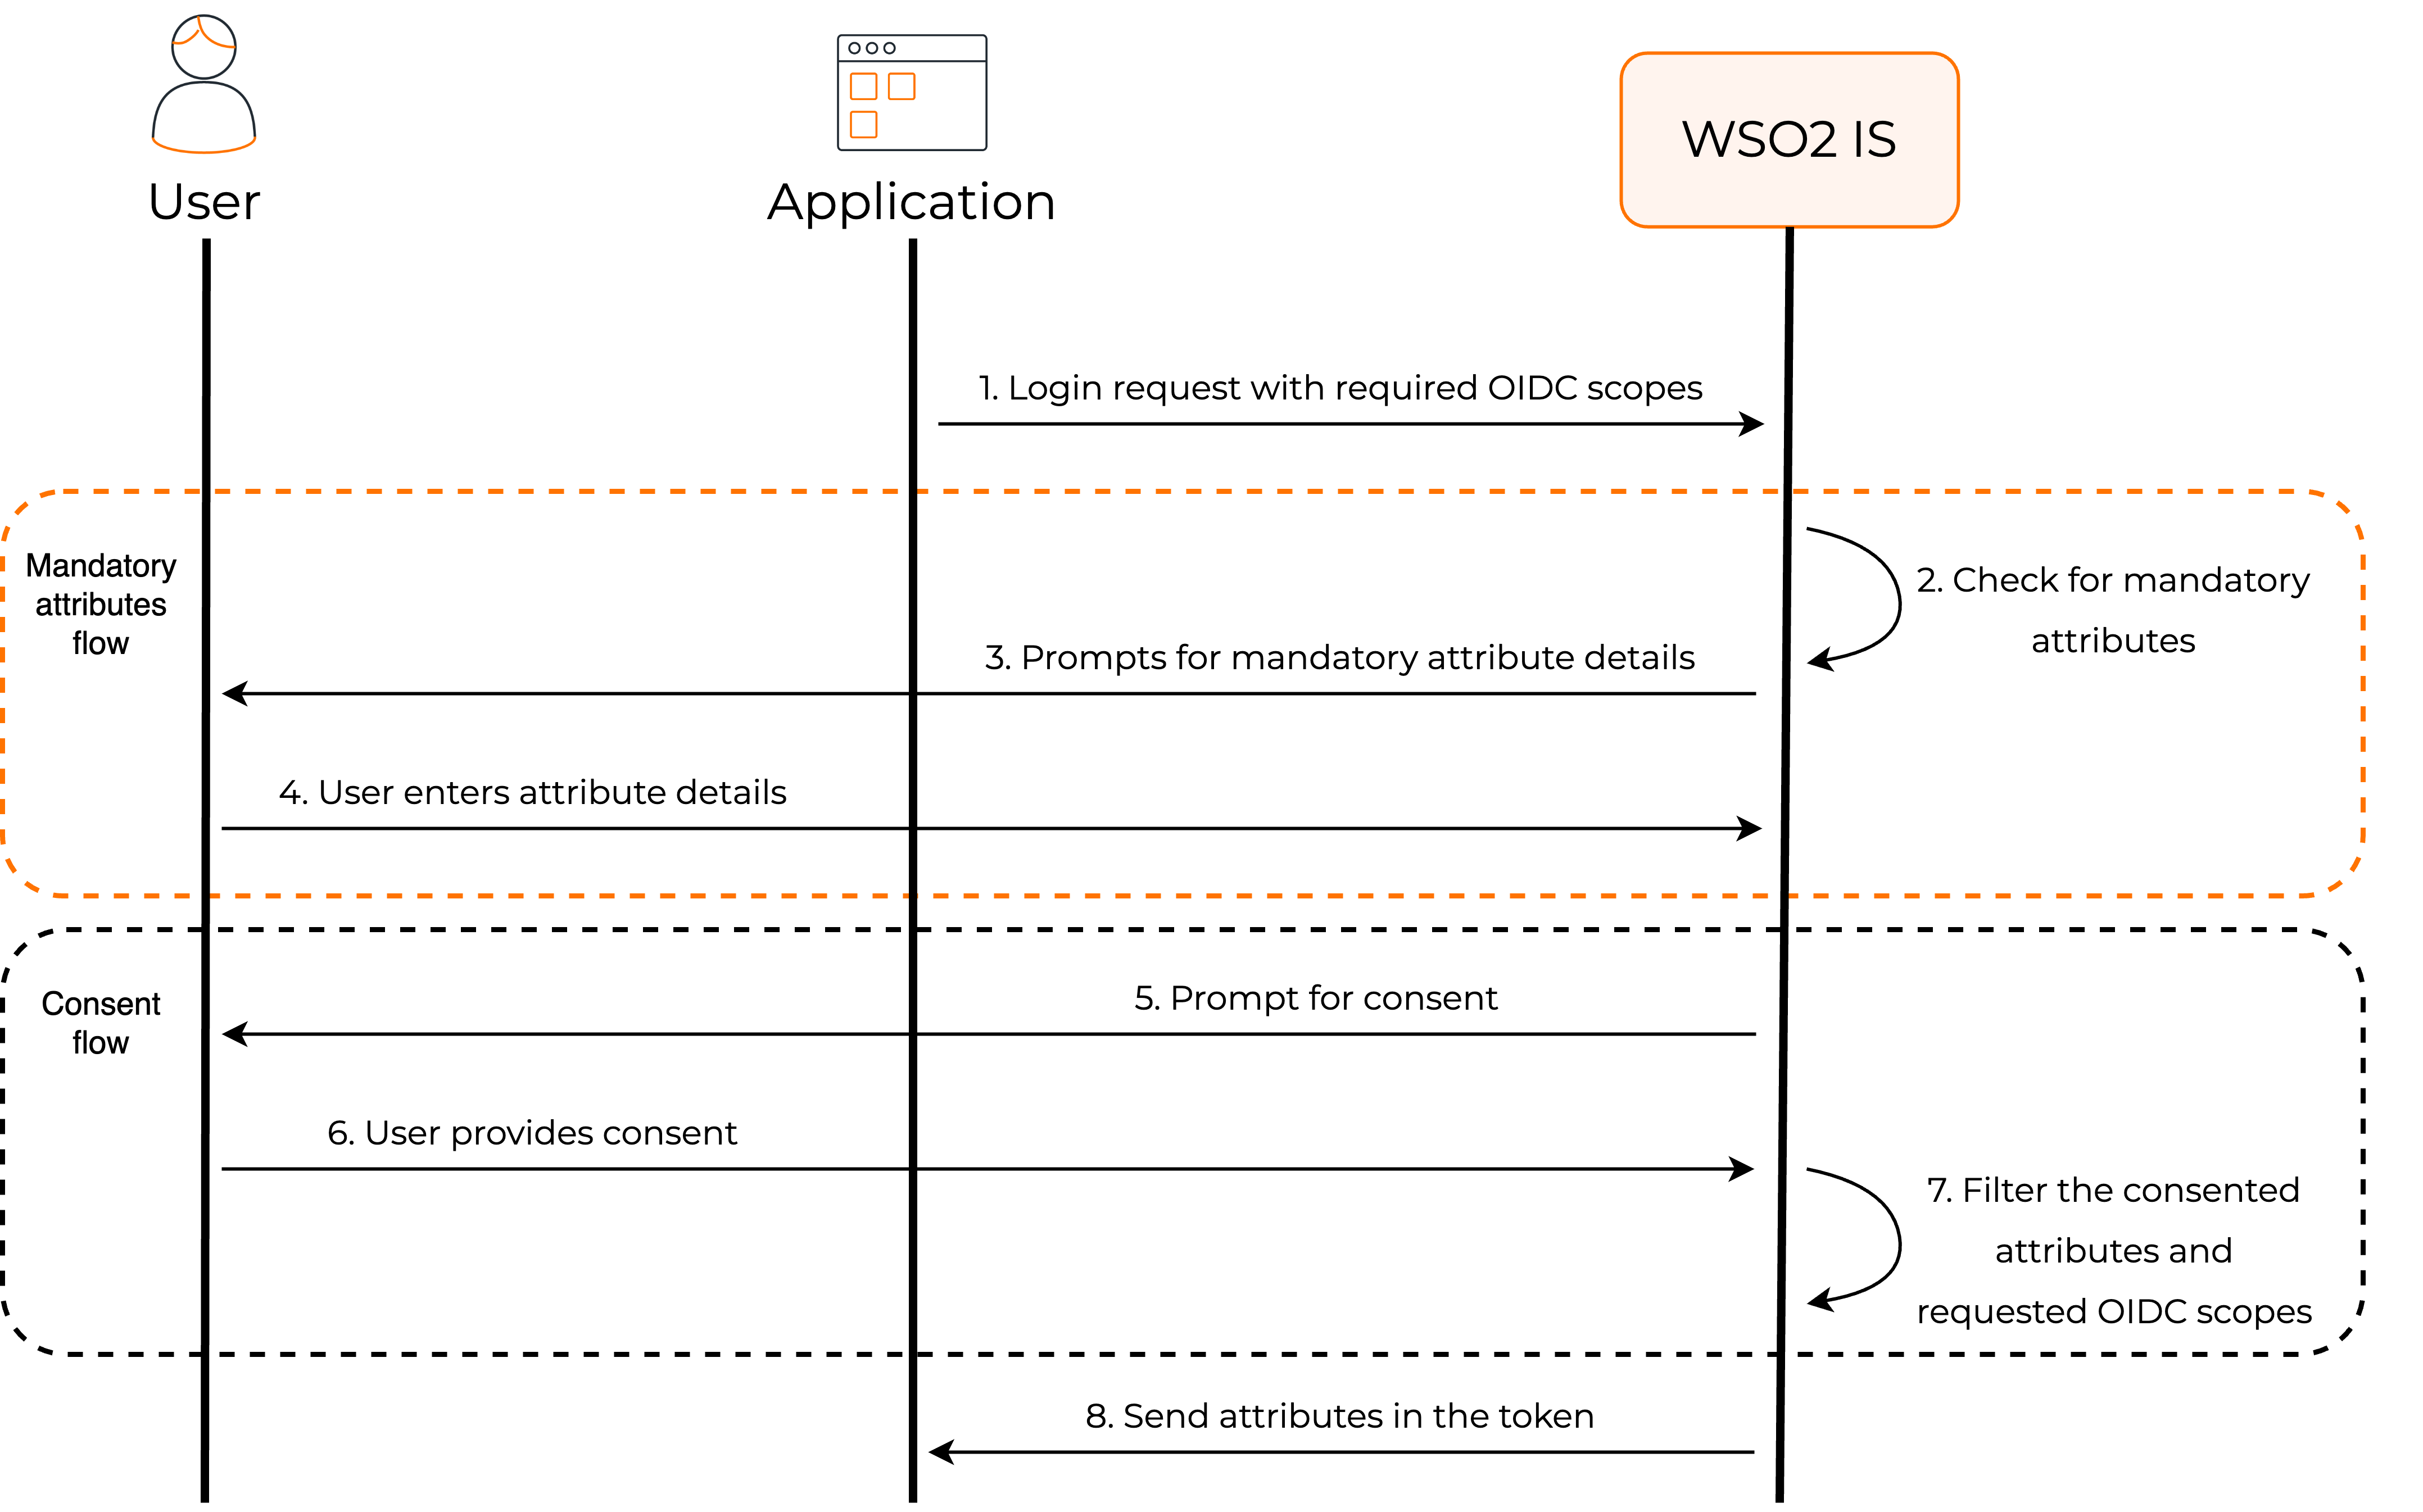 Provides consent for attributes in WSO2 Identity Server